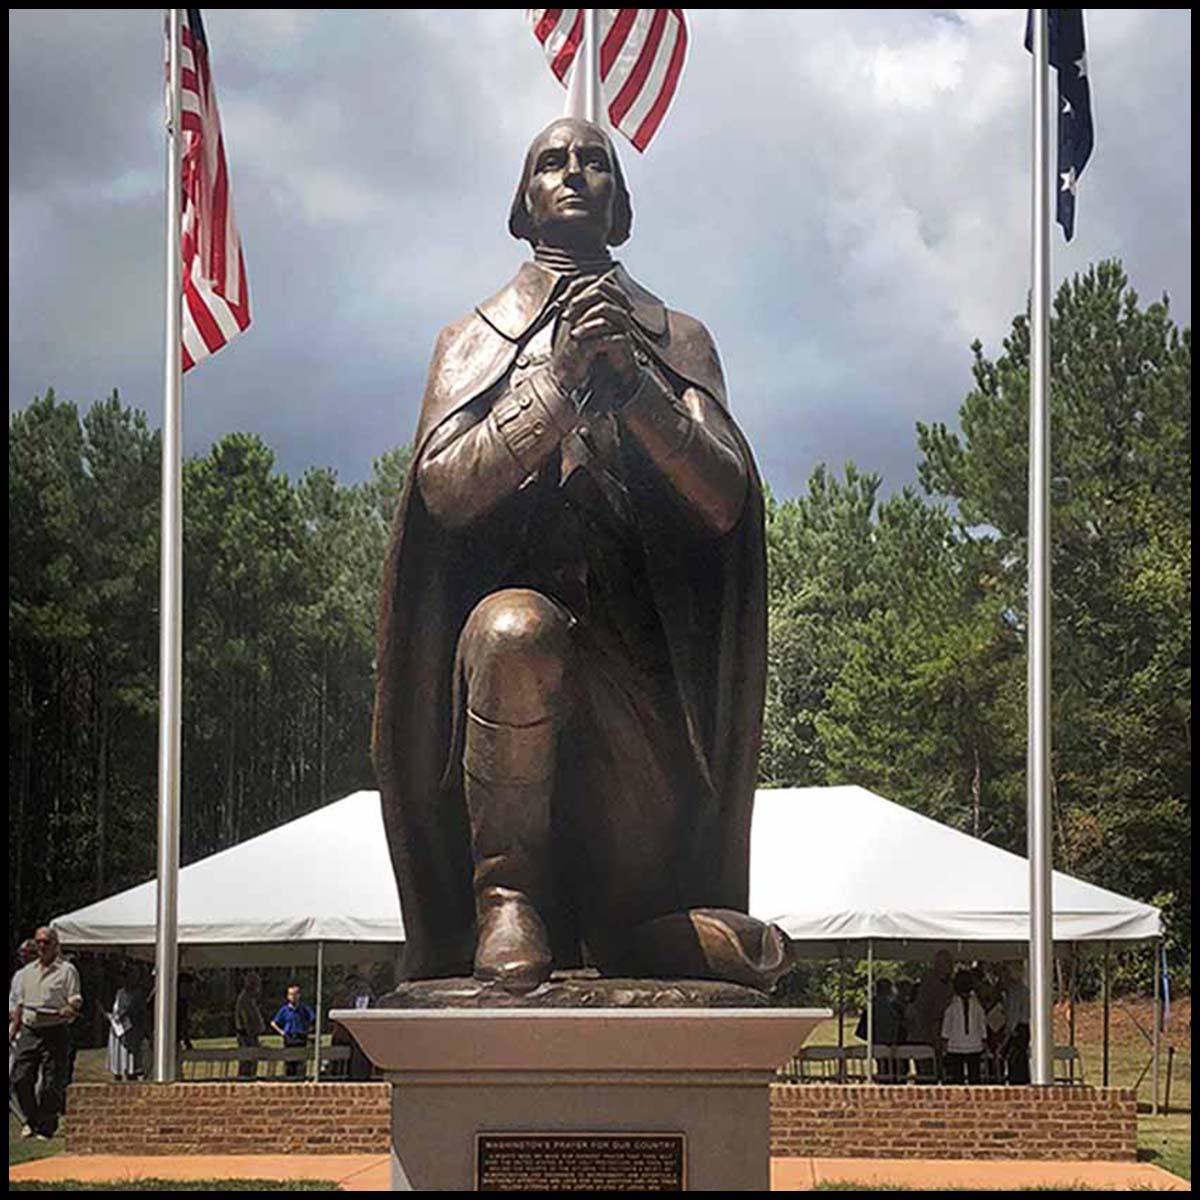 exterior photo of bronze sculpture of George Washington kneeling and praying on stone base